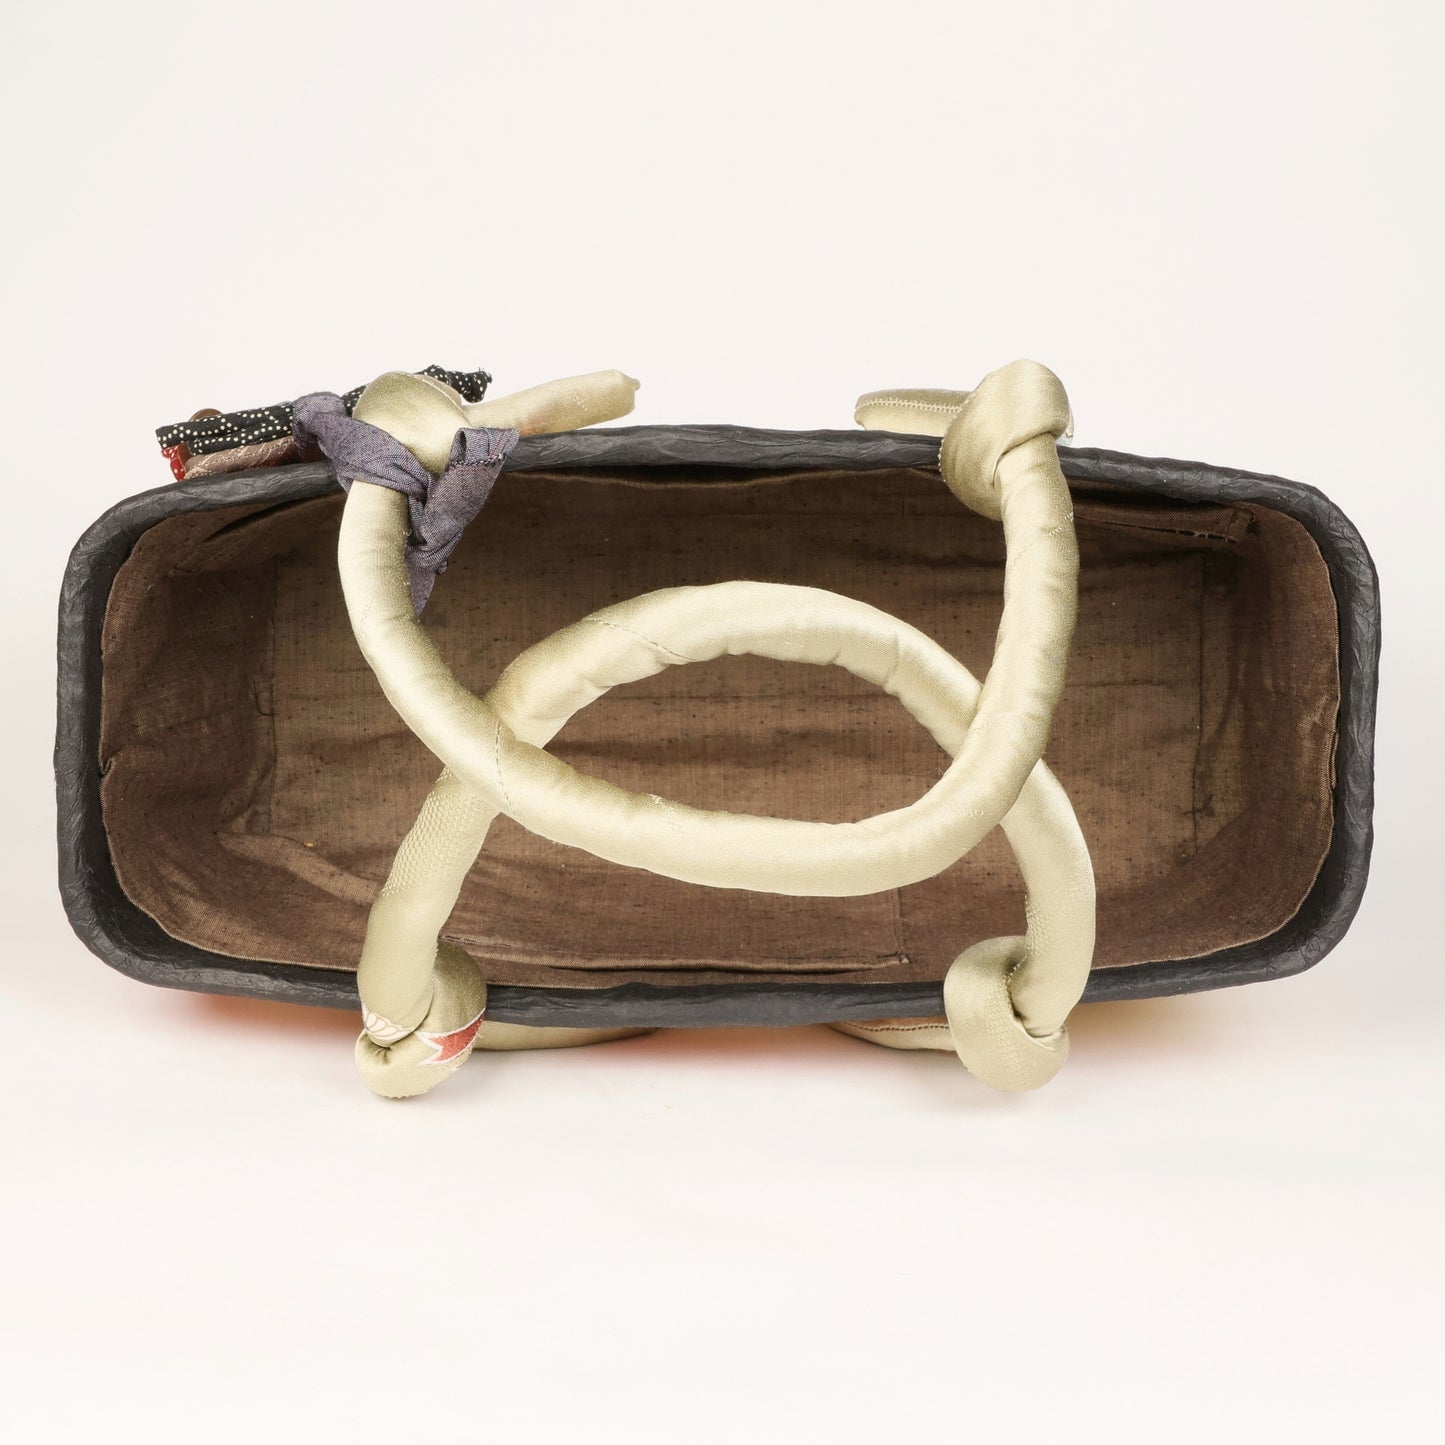 Ikkanbari bascket, Ikkanbari bag, Japanese traditional bascket, handmade in Japan, top handle bag, Japanese tote bag, Free Shipping